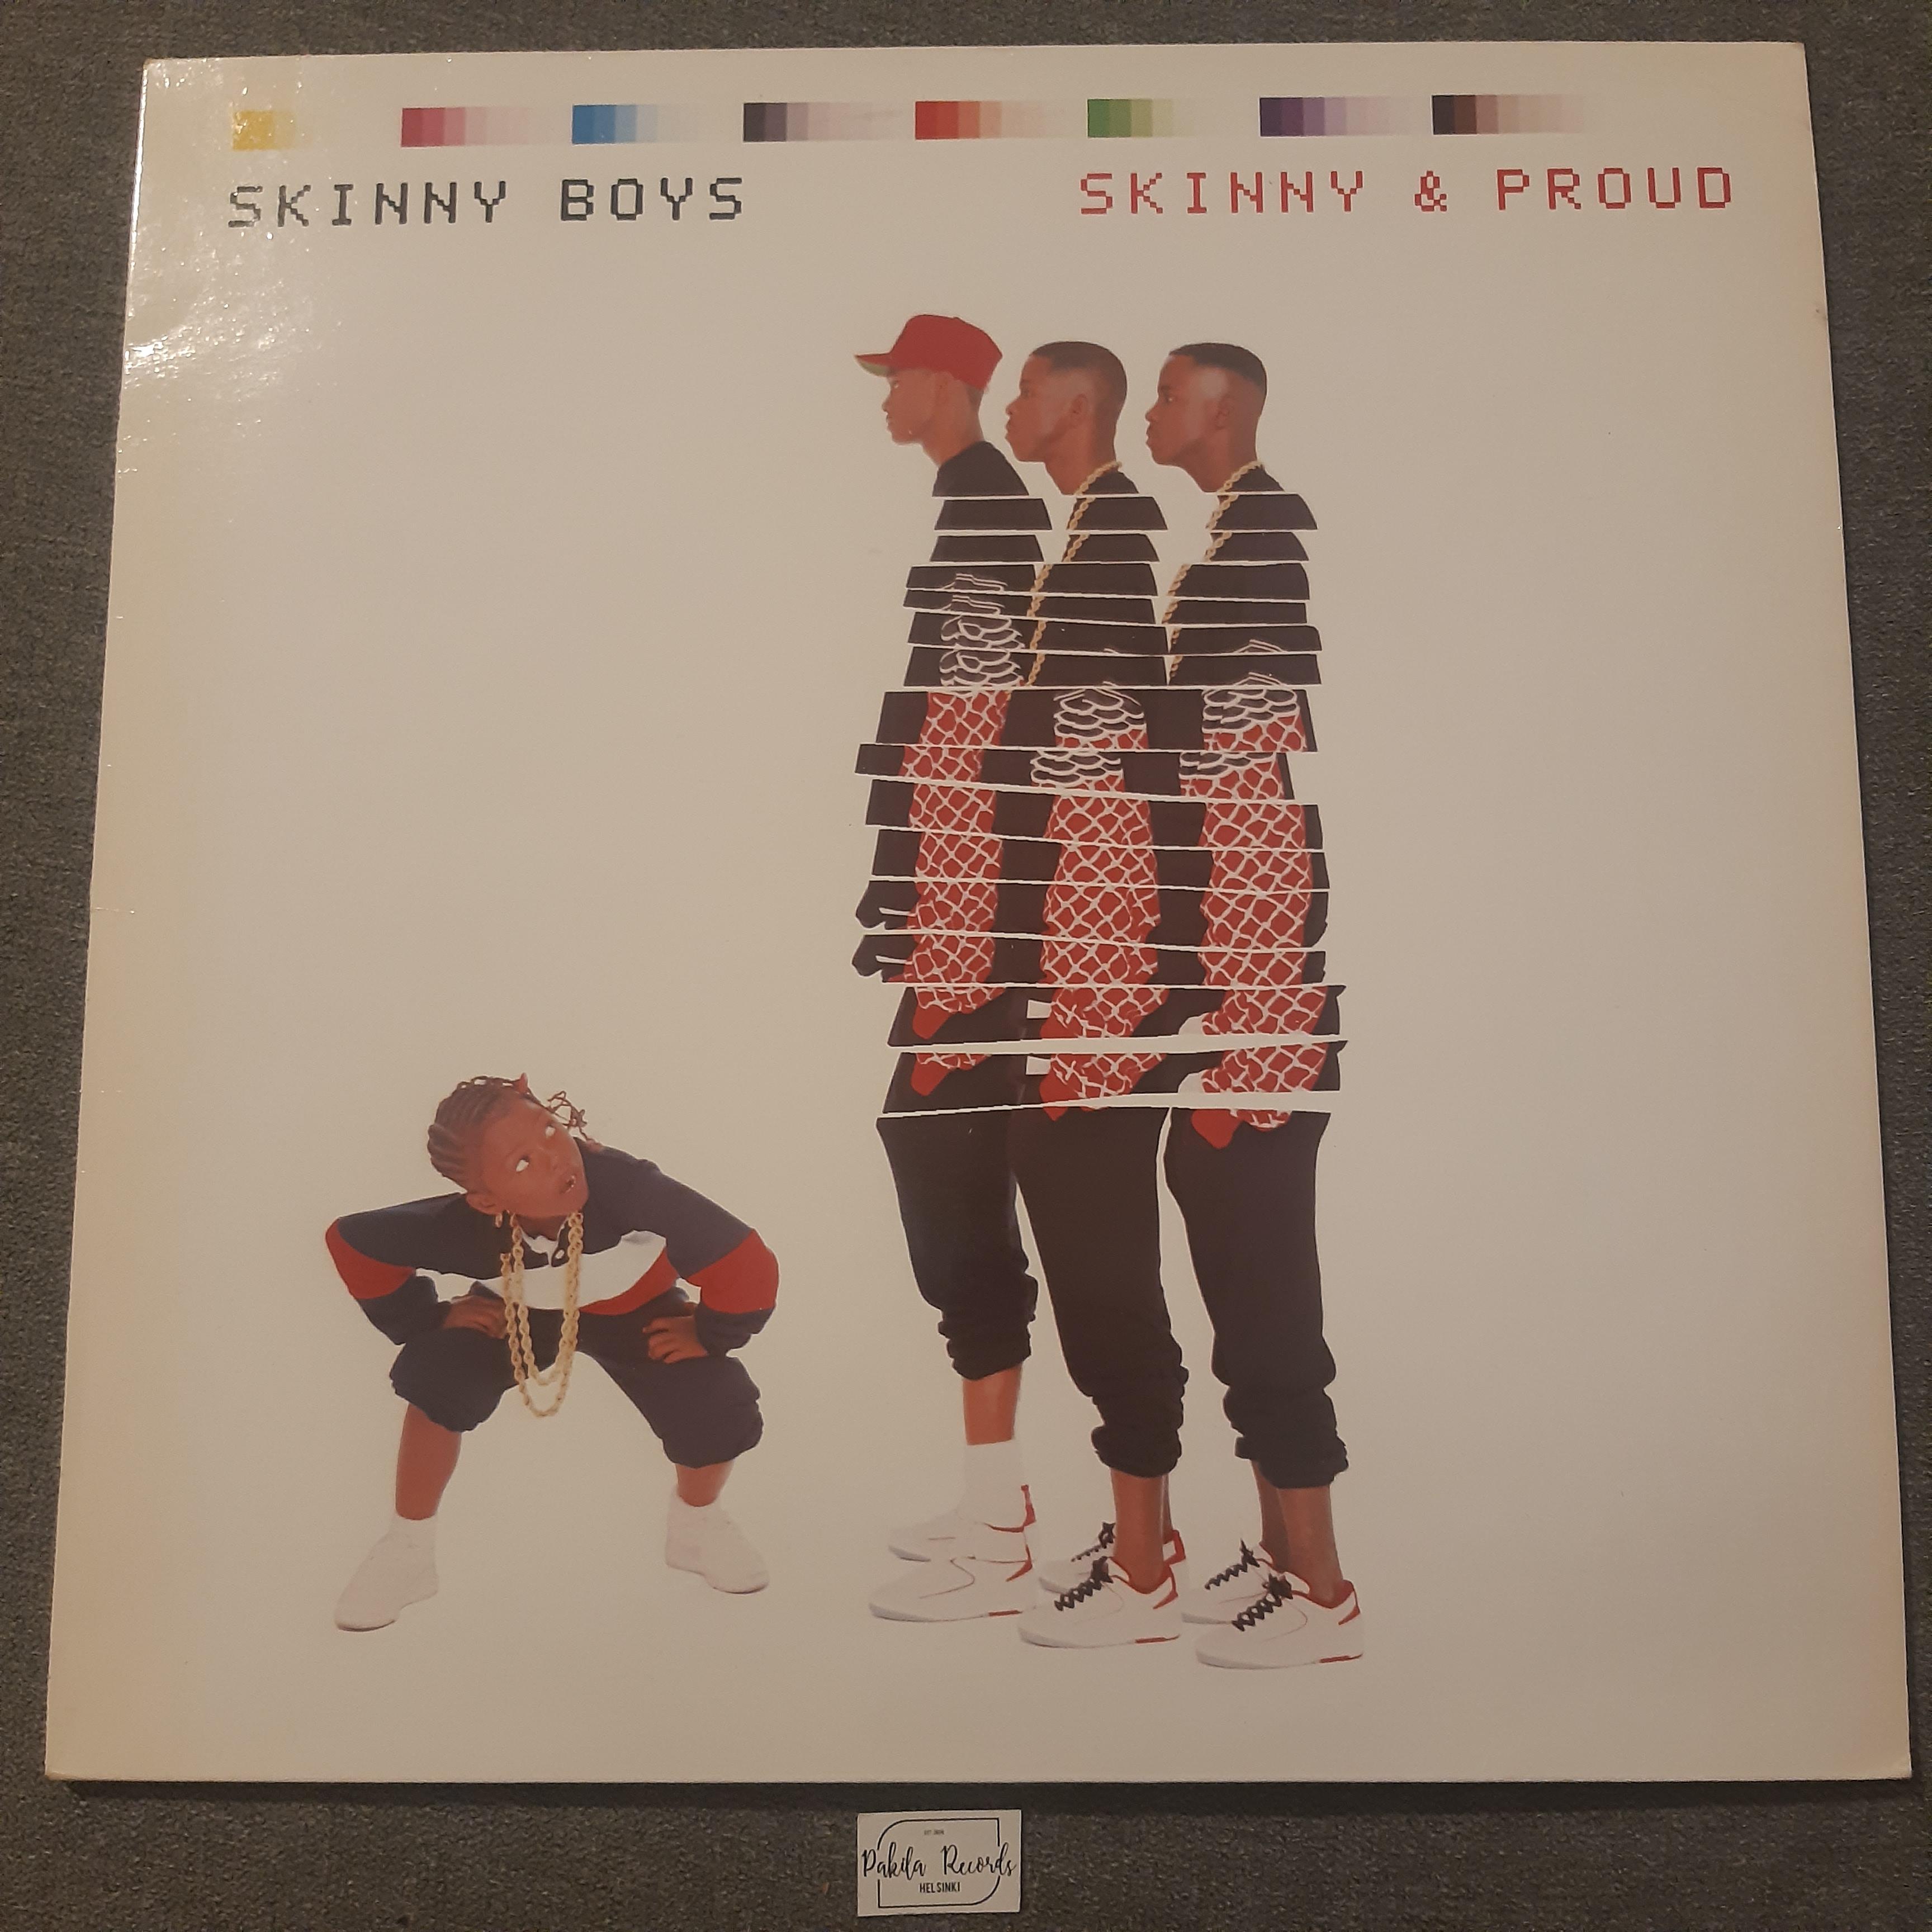 Skinny Boys - Skinny & Proud - LP (käytetty)